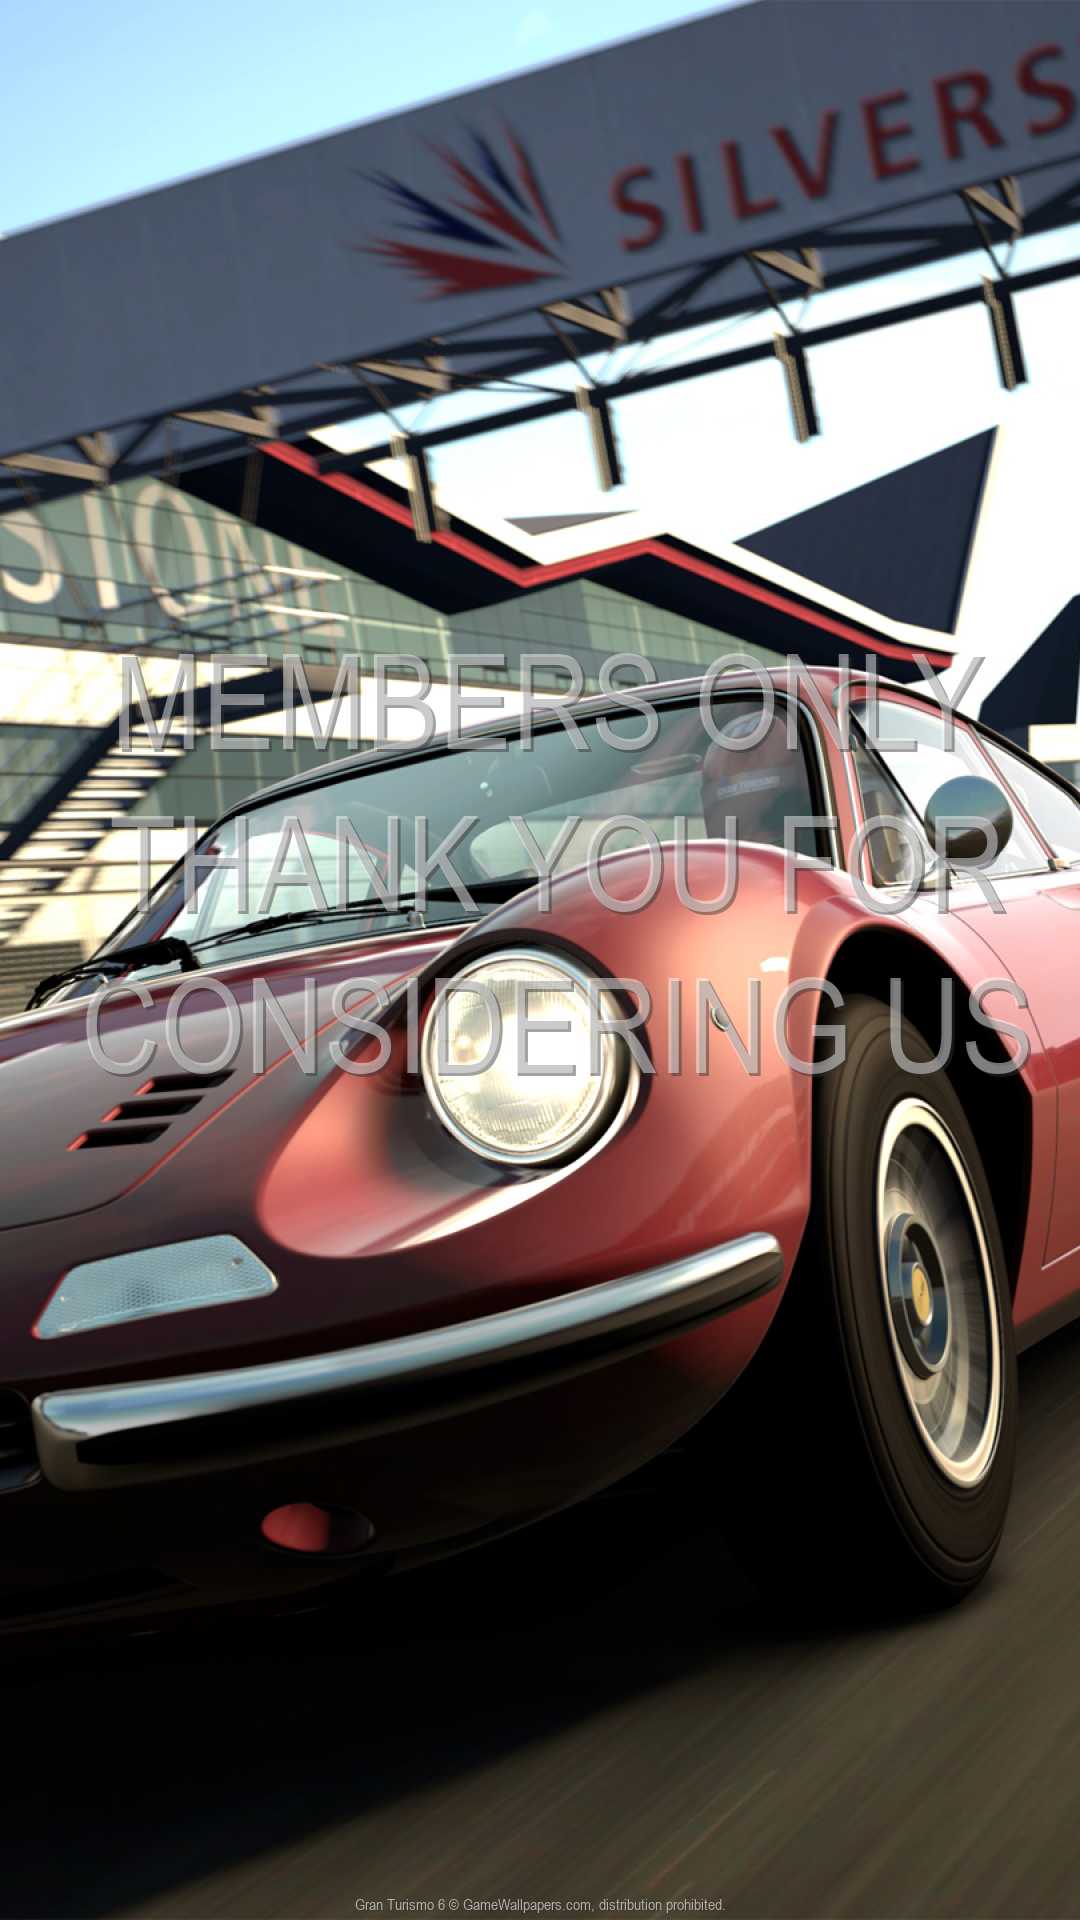 Gran Turismo 6 1080p%20Vertical Mobile wallpaper or background 02